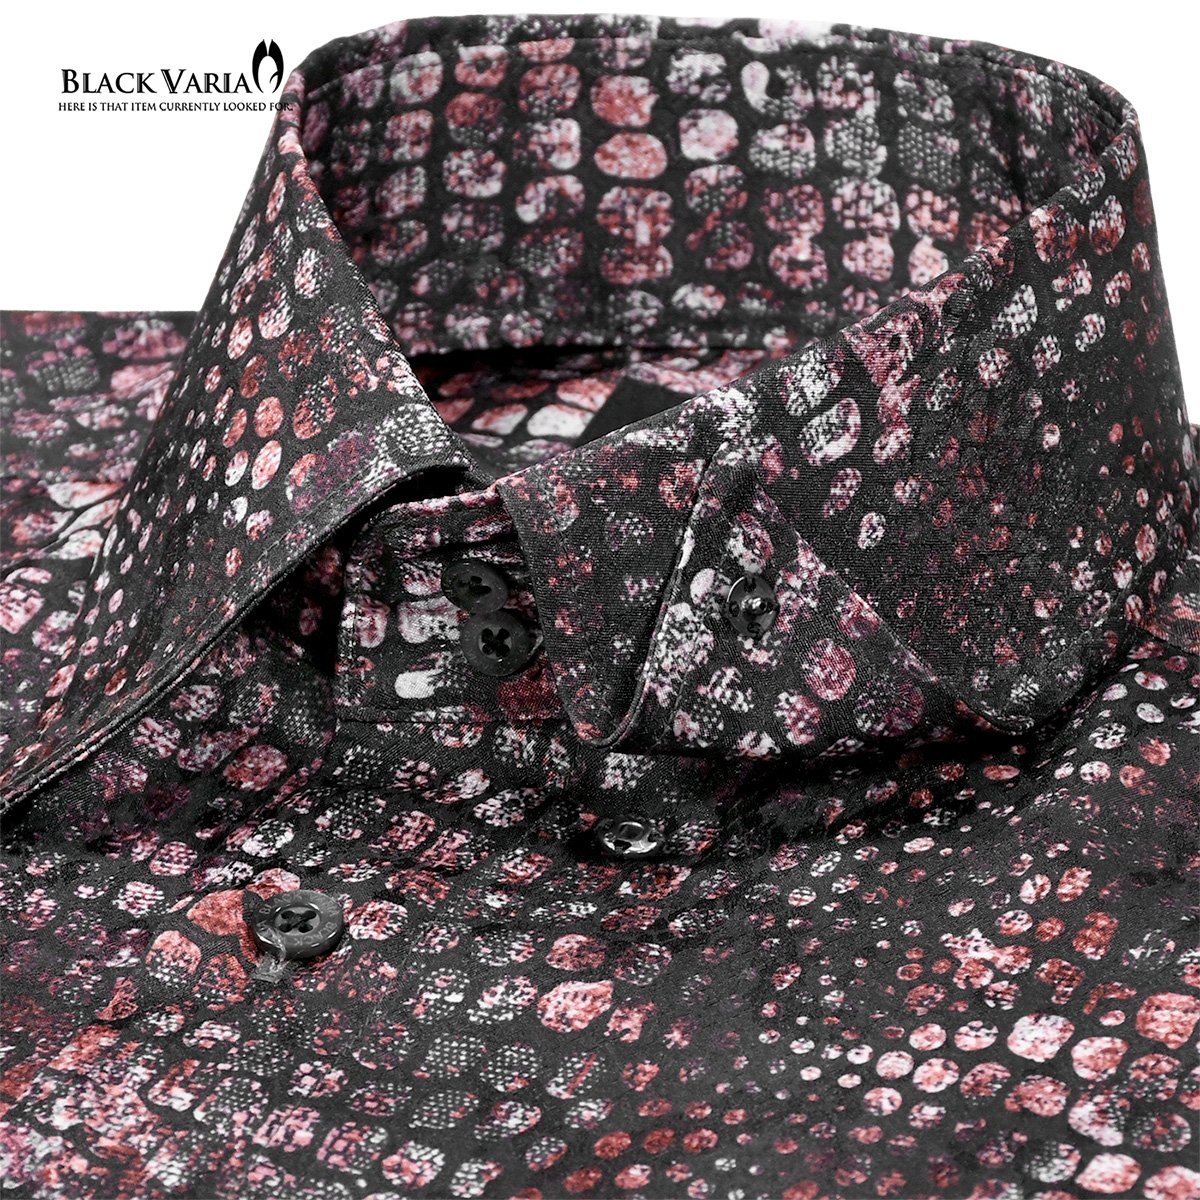 211200-win BlackVaria ドゥエボットーニ 蛇柄 サテンドレスシャツ 衿先スナップボタン パイソンジャガード メンズ(レッド赤ワイン) XL_画像2